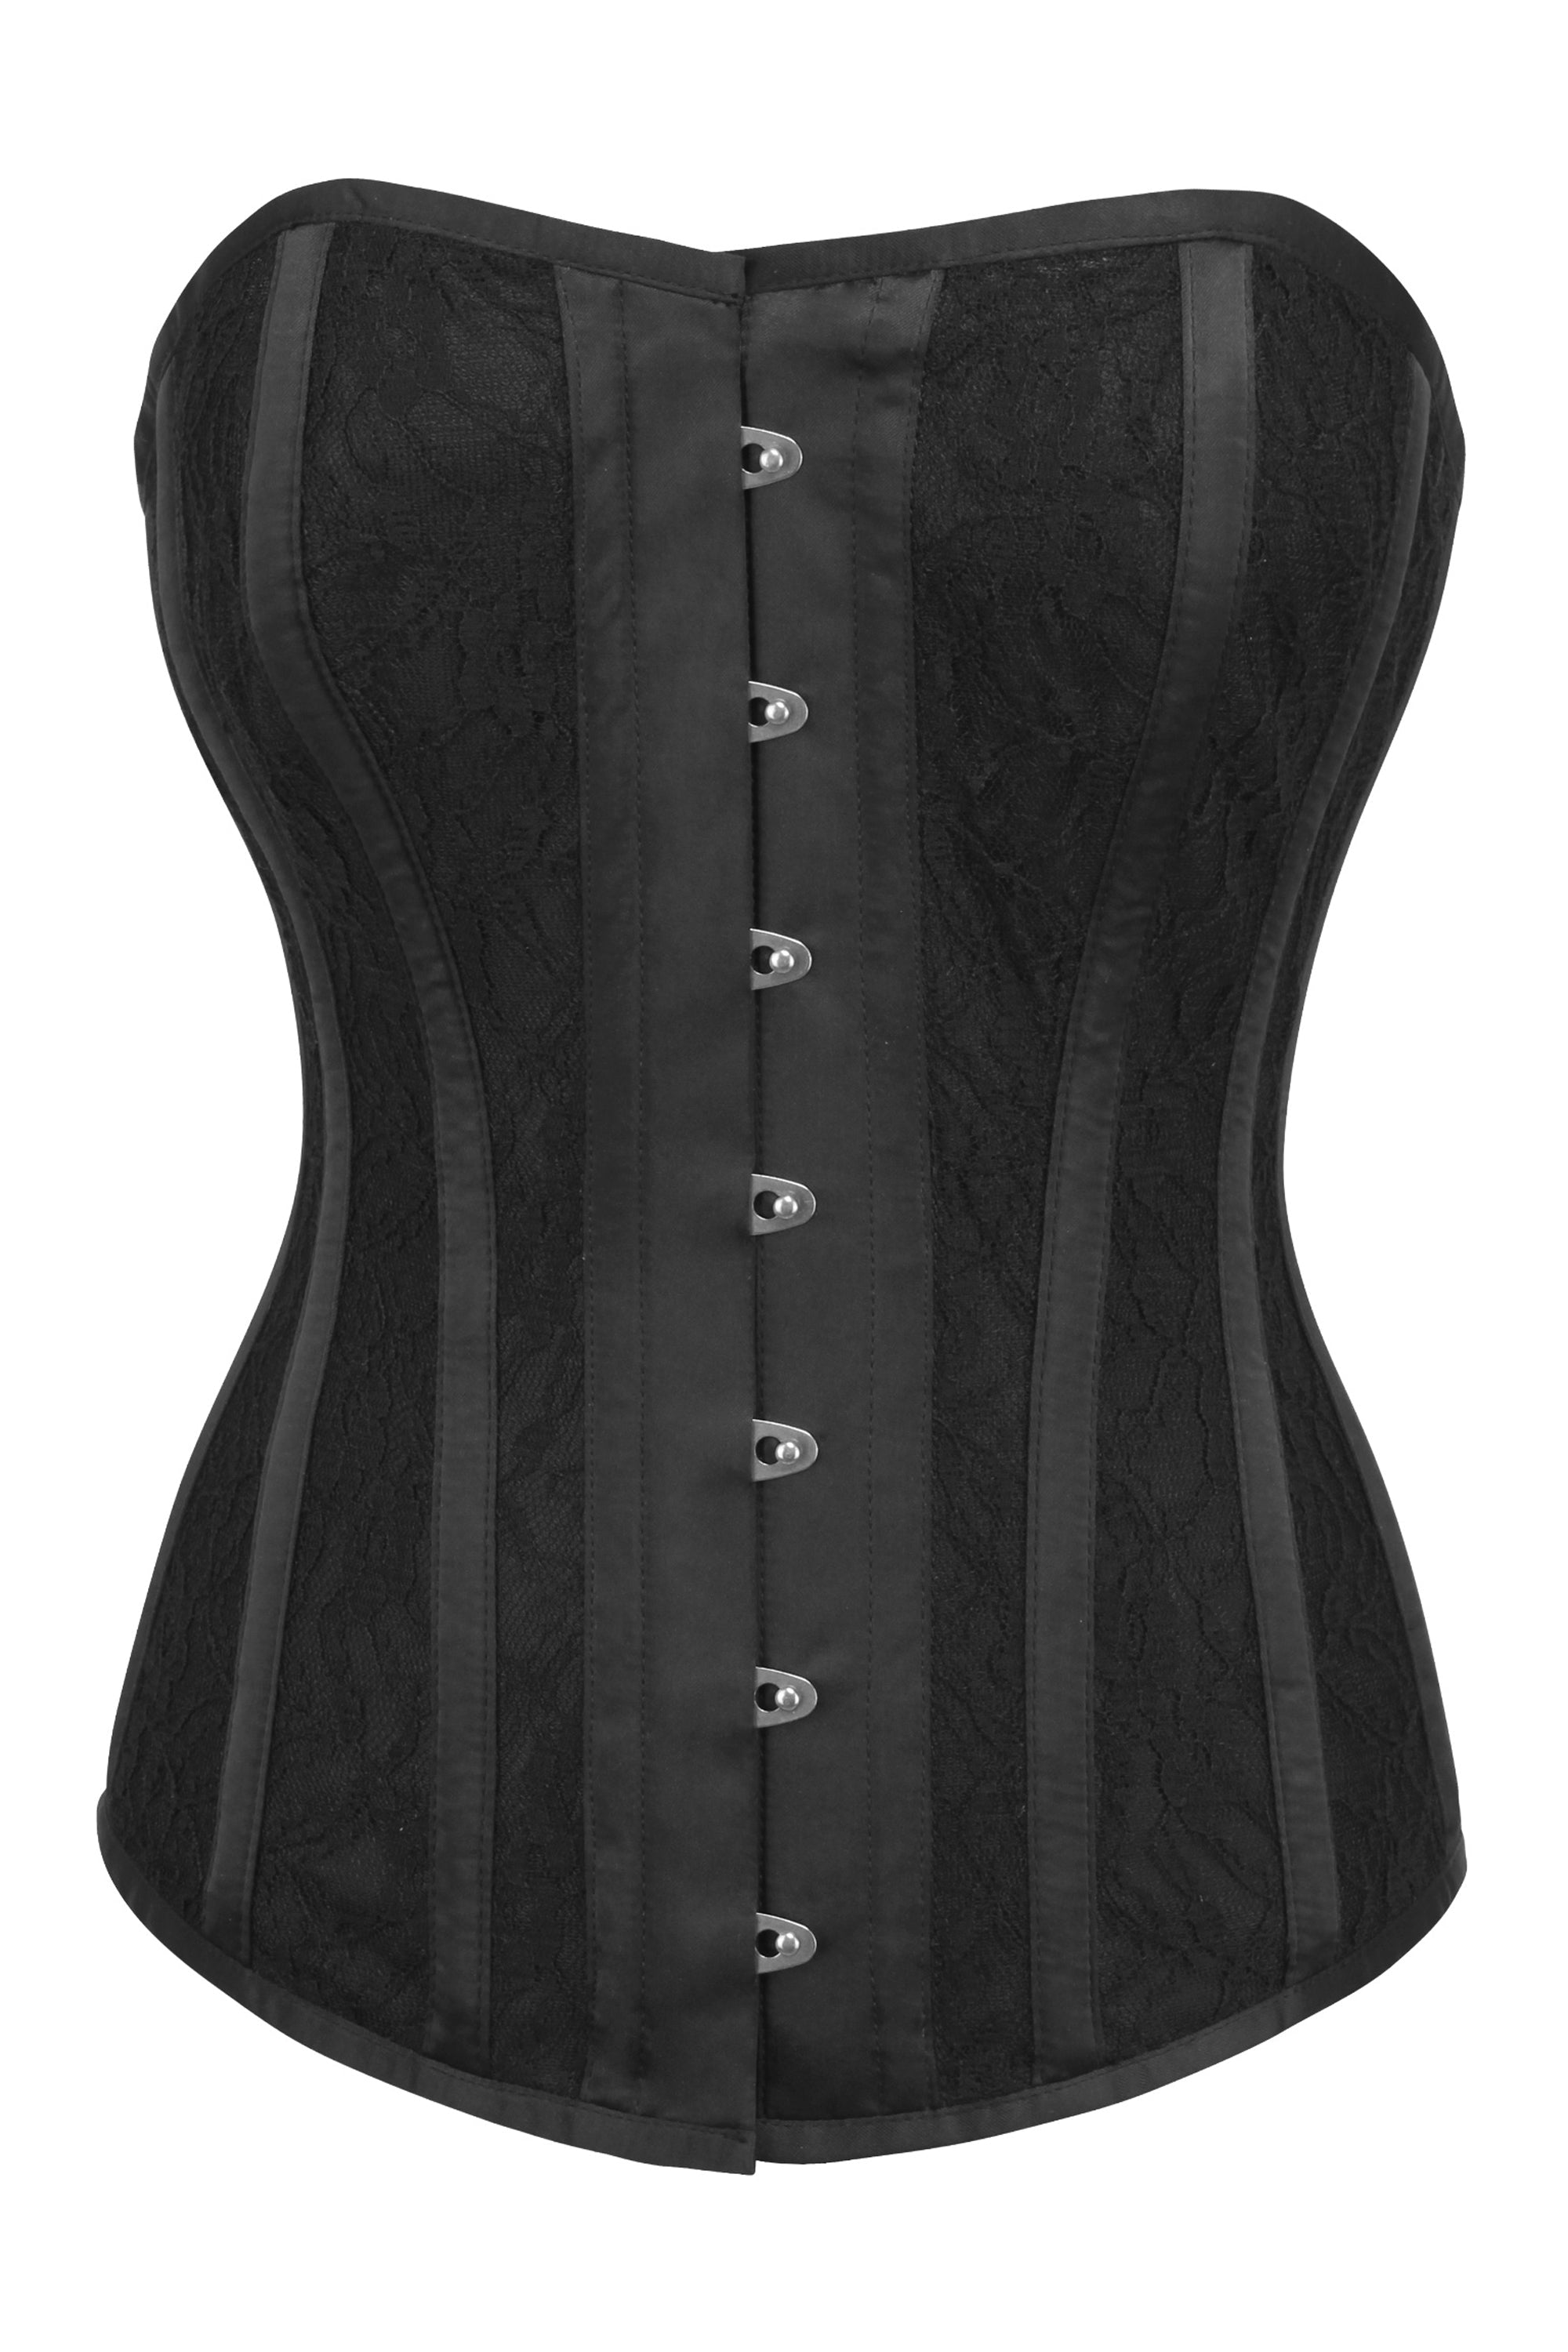 Black heavy corsetry satin Edwardian corset -MF1353